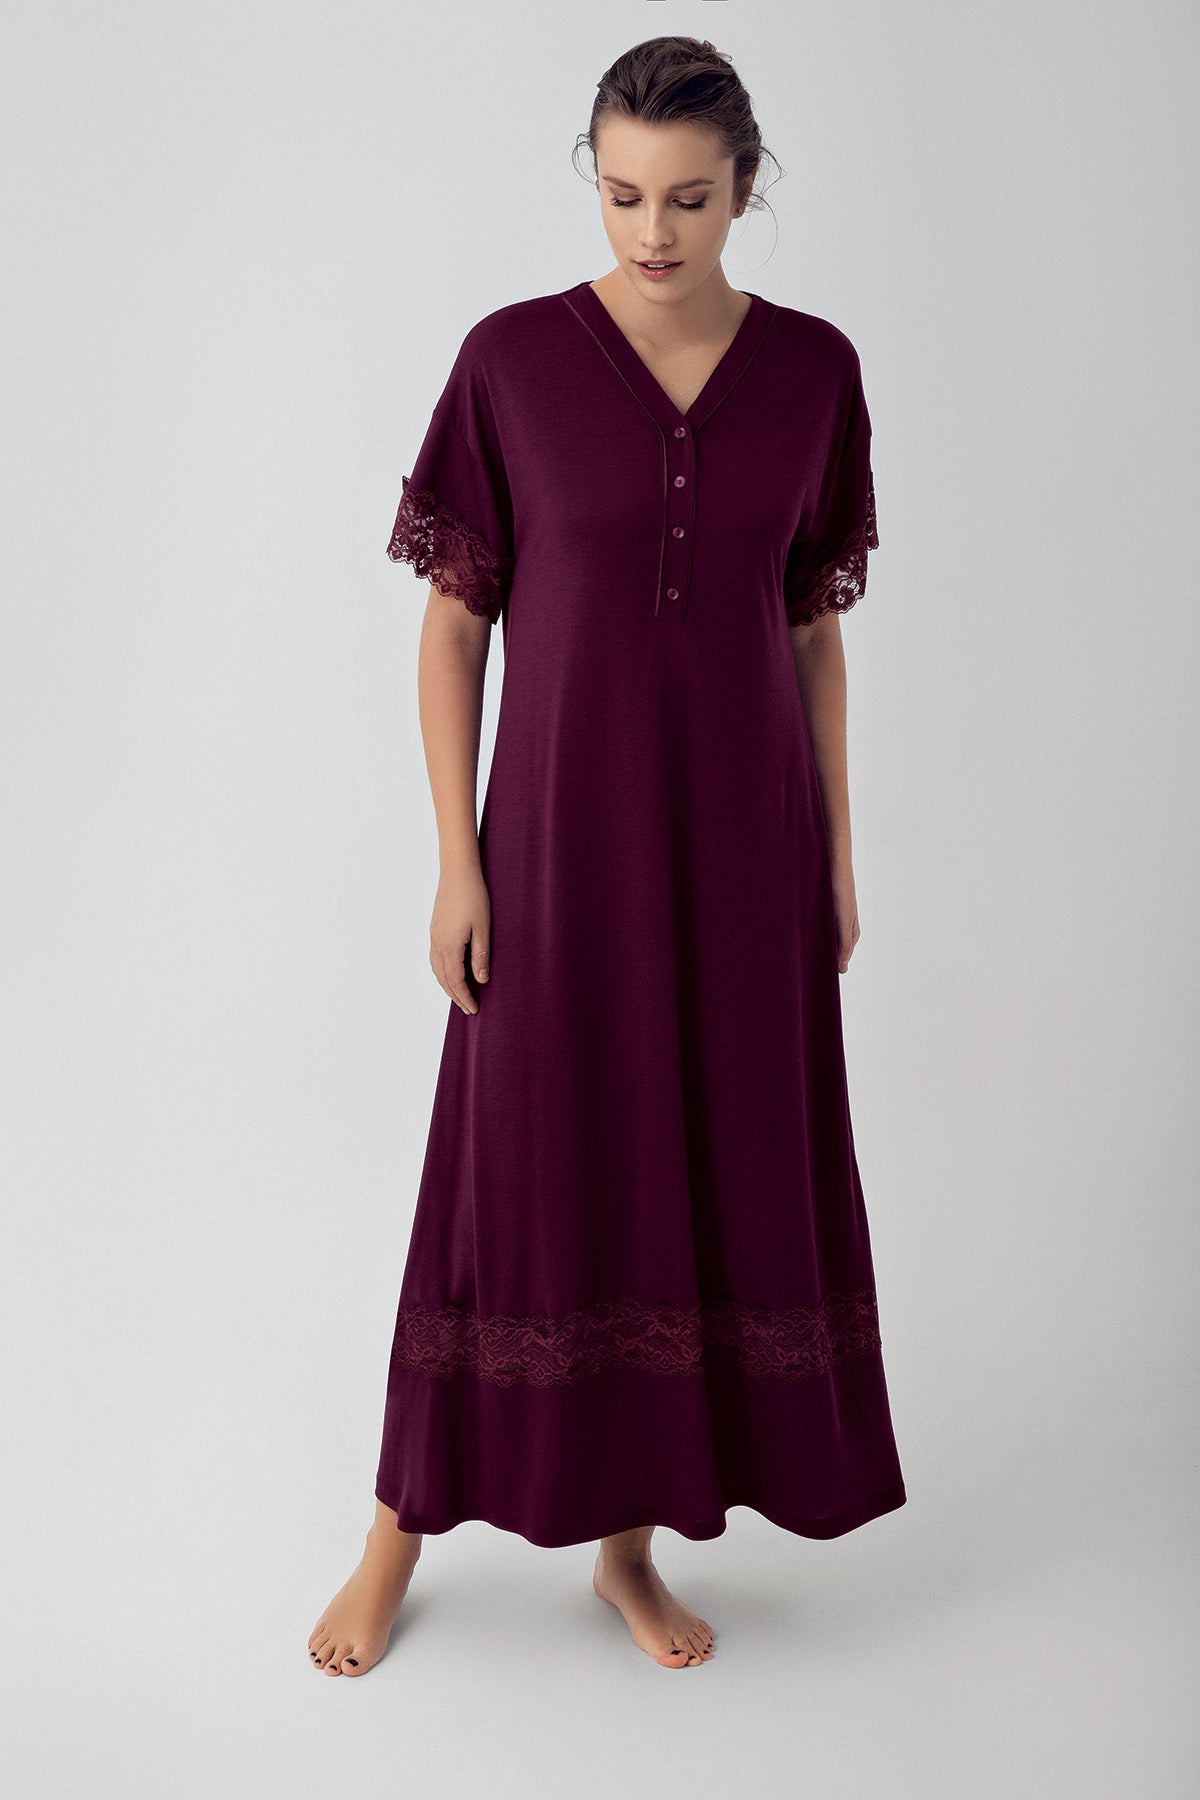 Shopymommy 16111 Lace Sleeve Maternity & Nursing Nightgown Plum